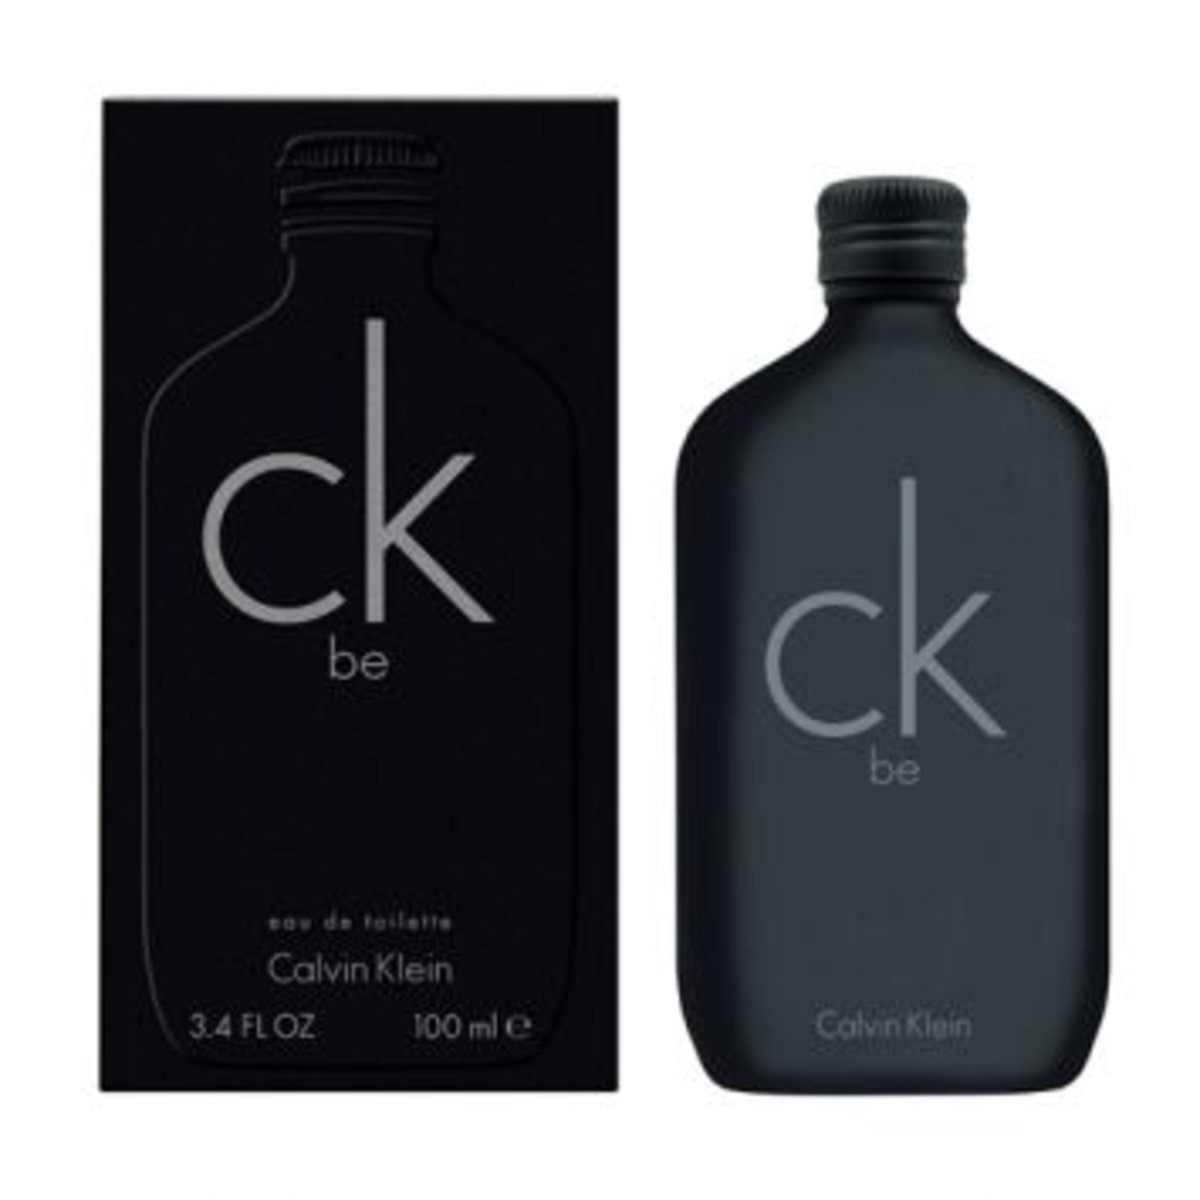 ck truth perfume